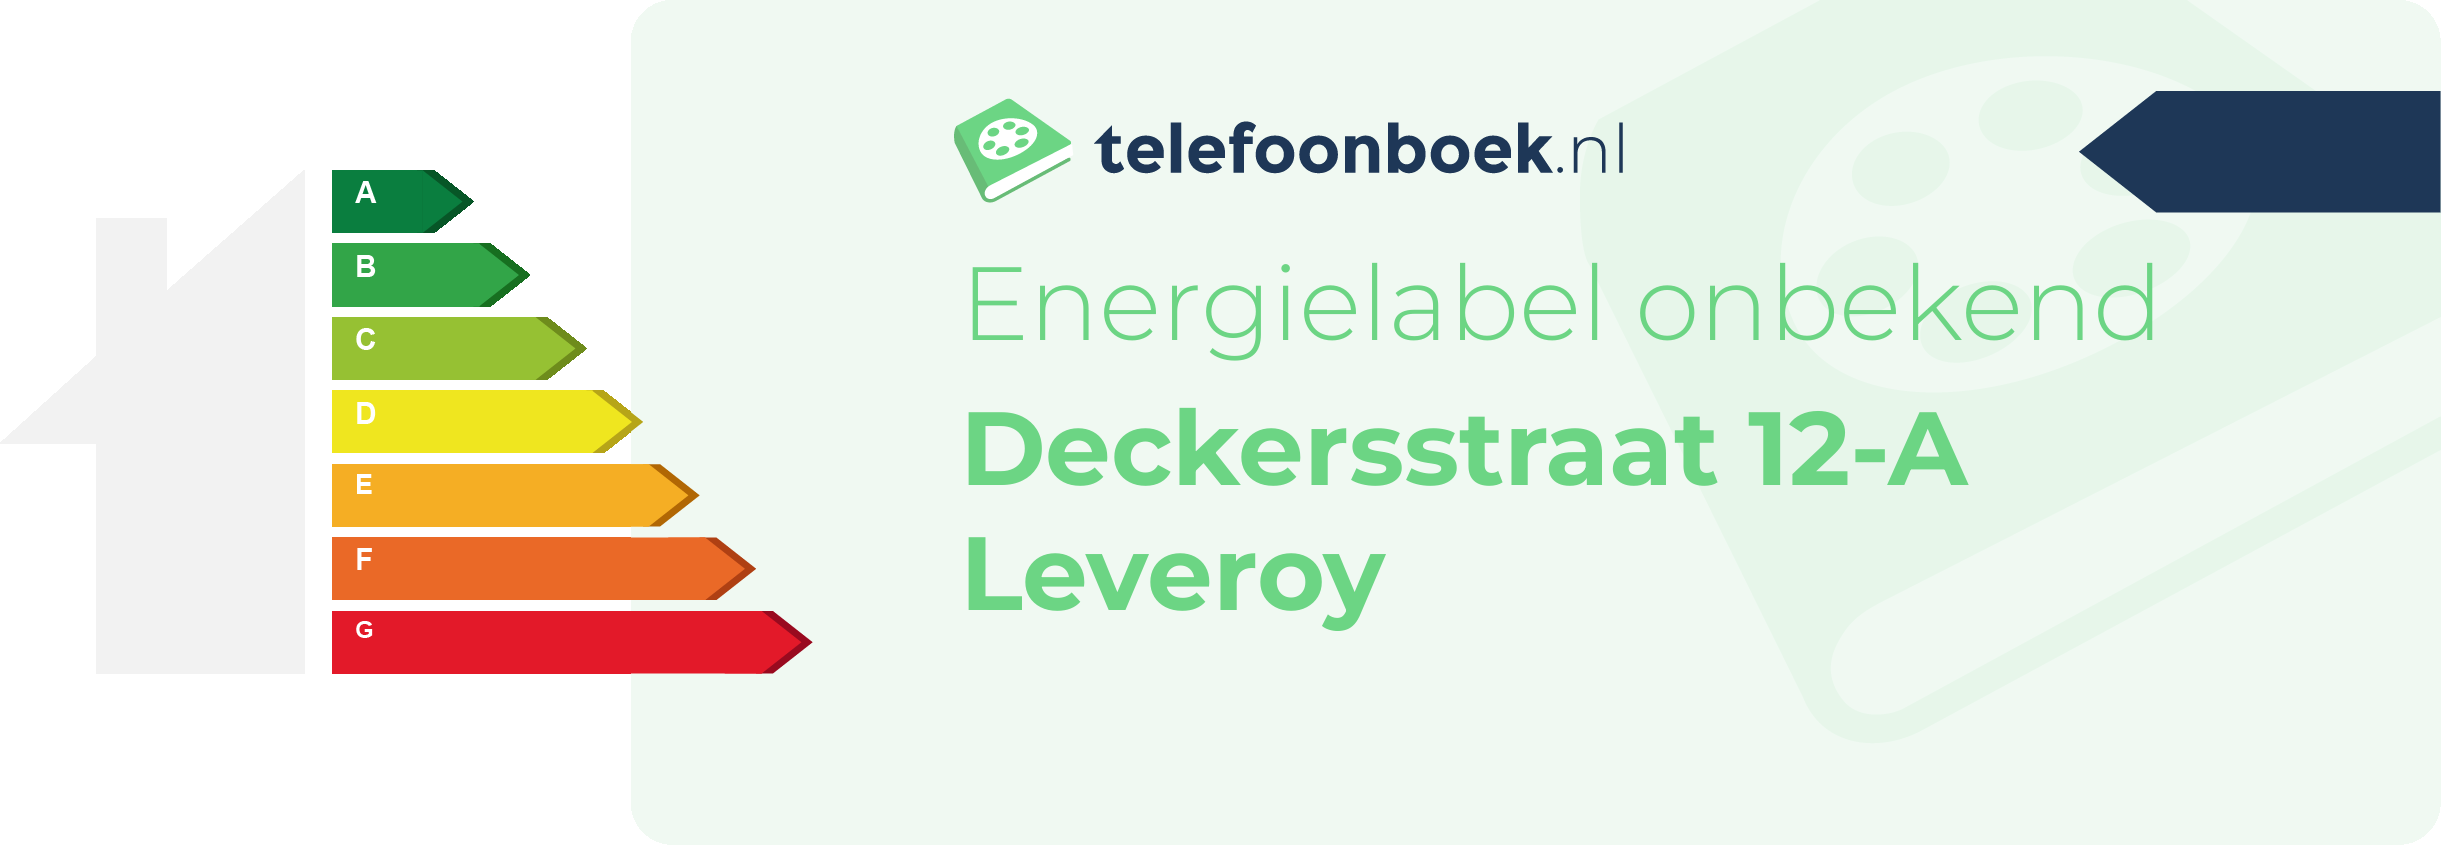 Energielabel Deckersstraat 12-A Leveroy